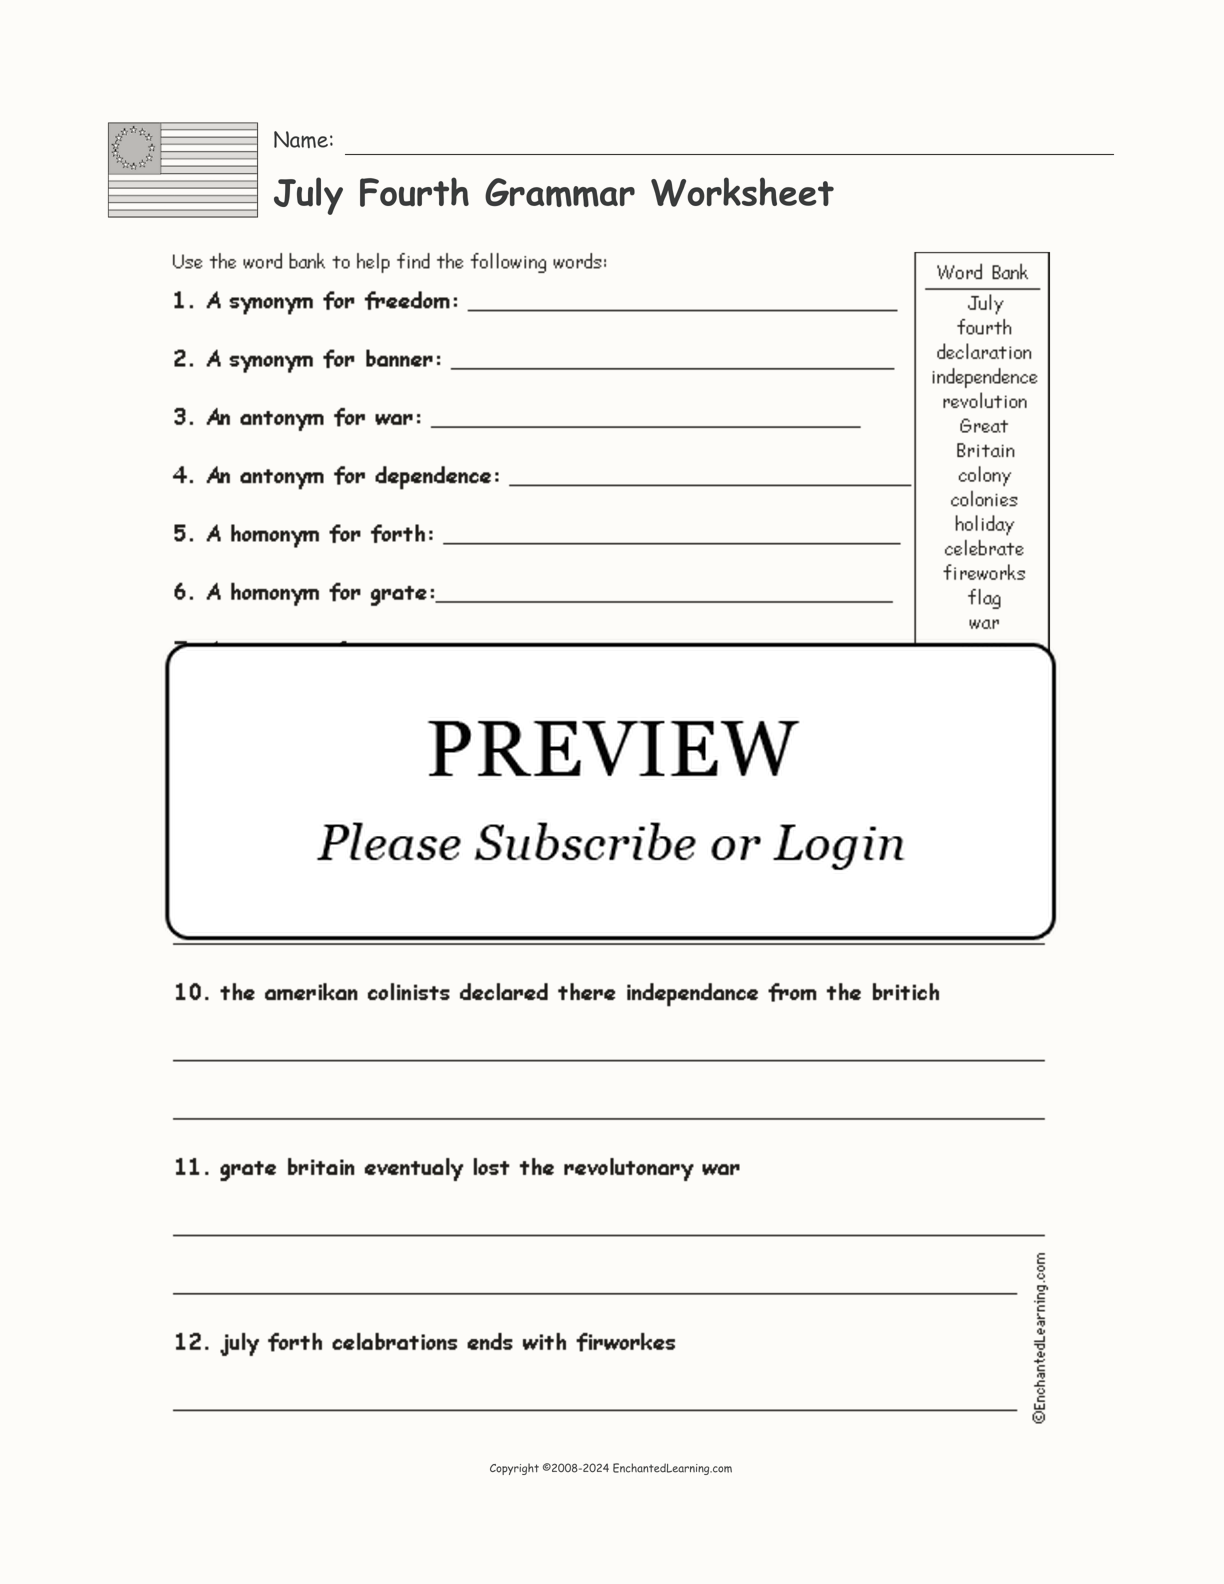 July Fourth Grammar Worksheet interactive worksheet page 1